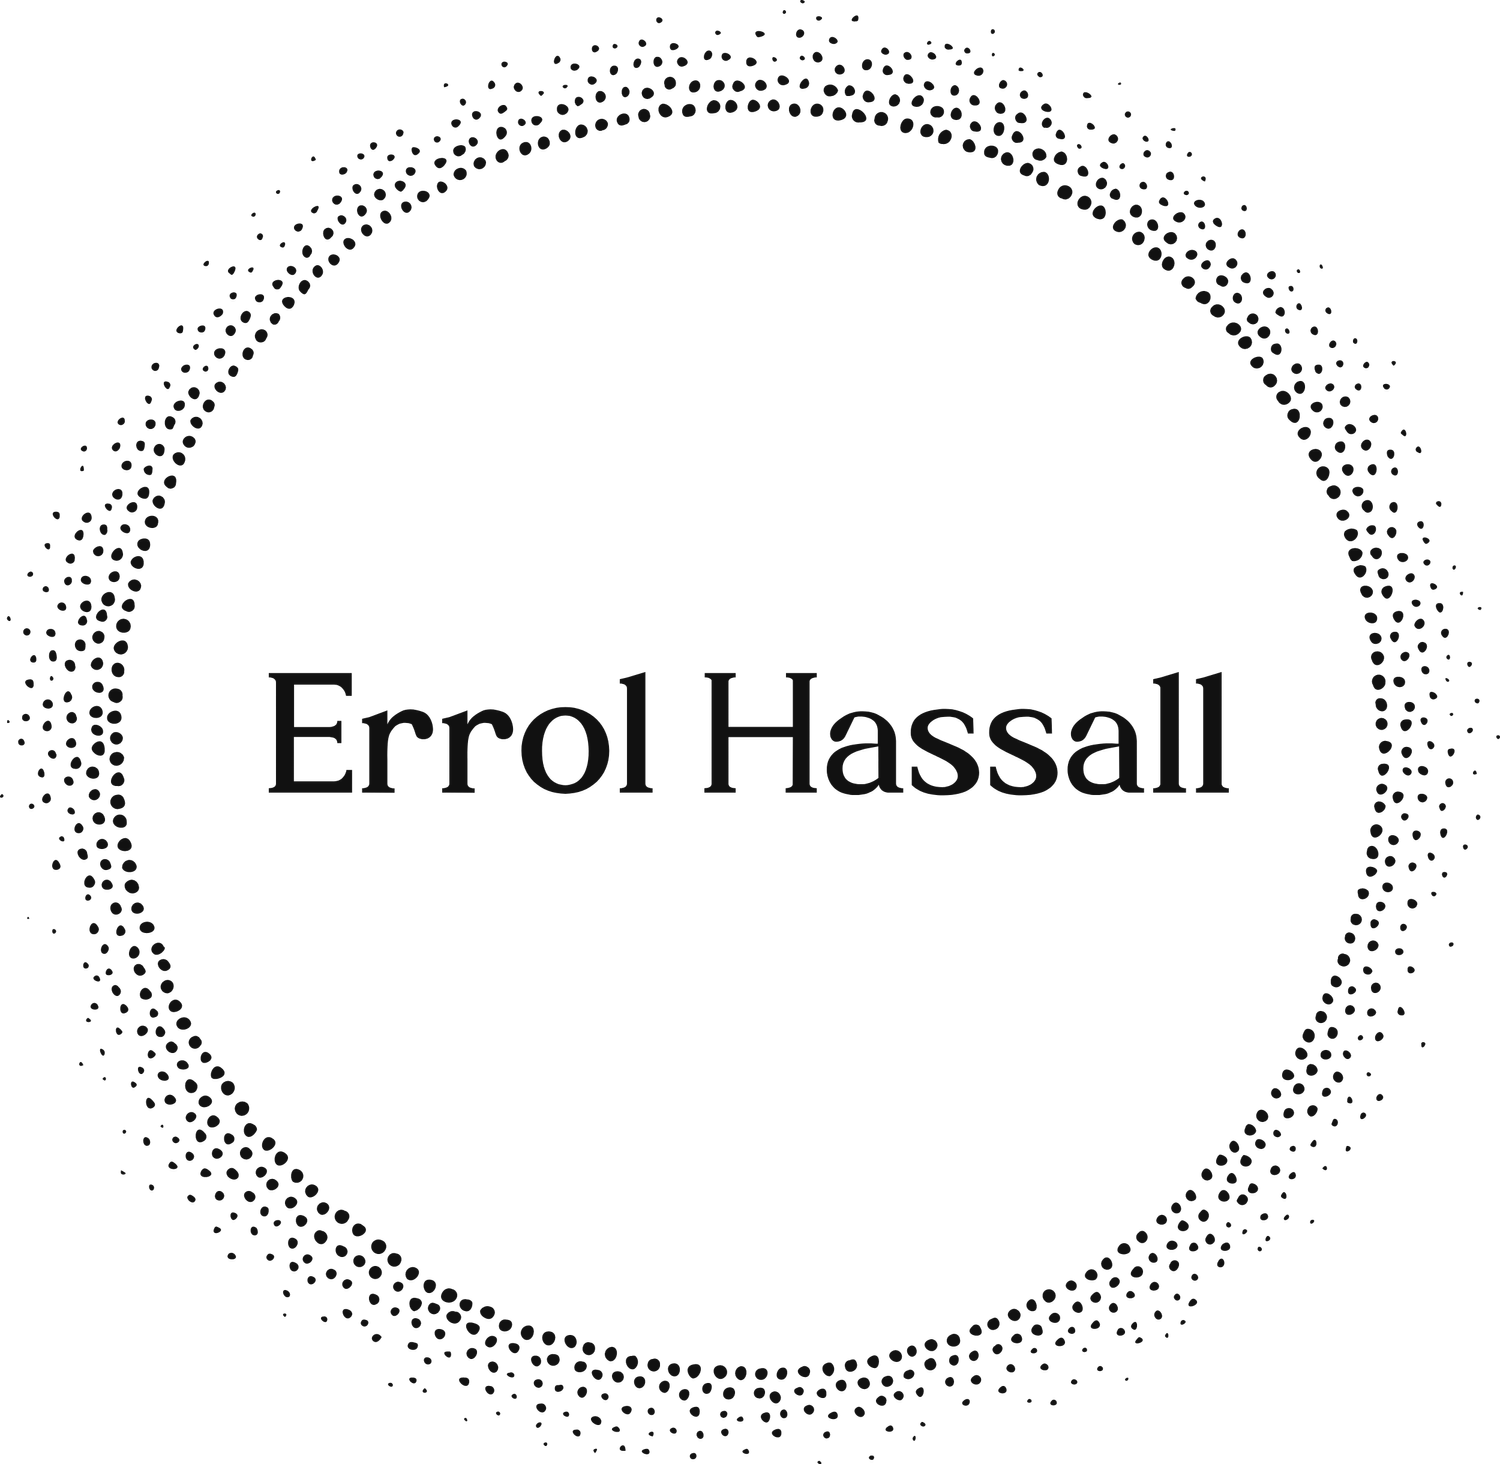 Errol Hassall